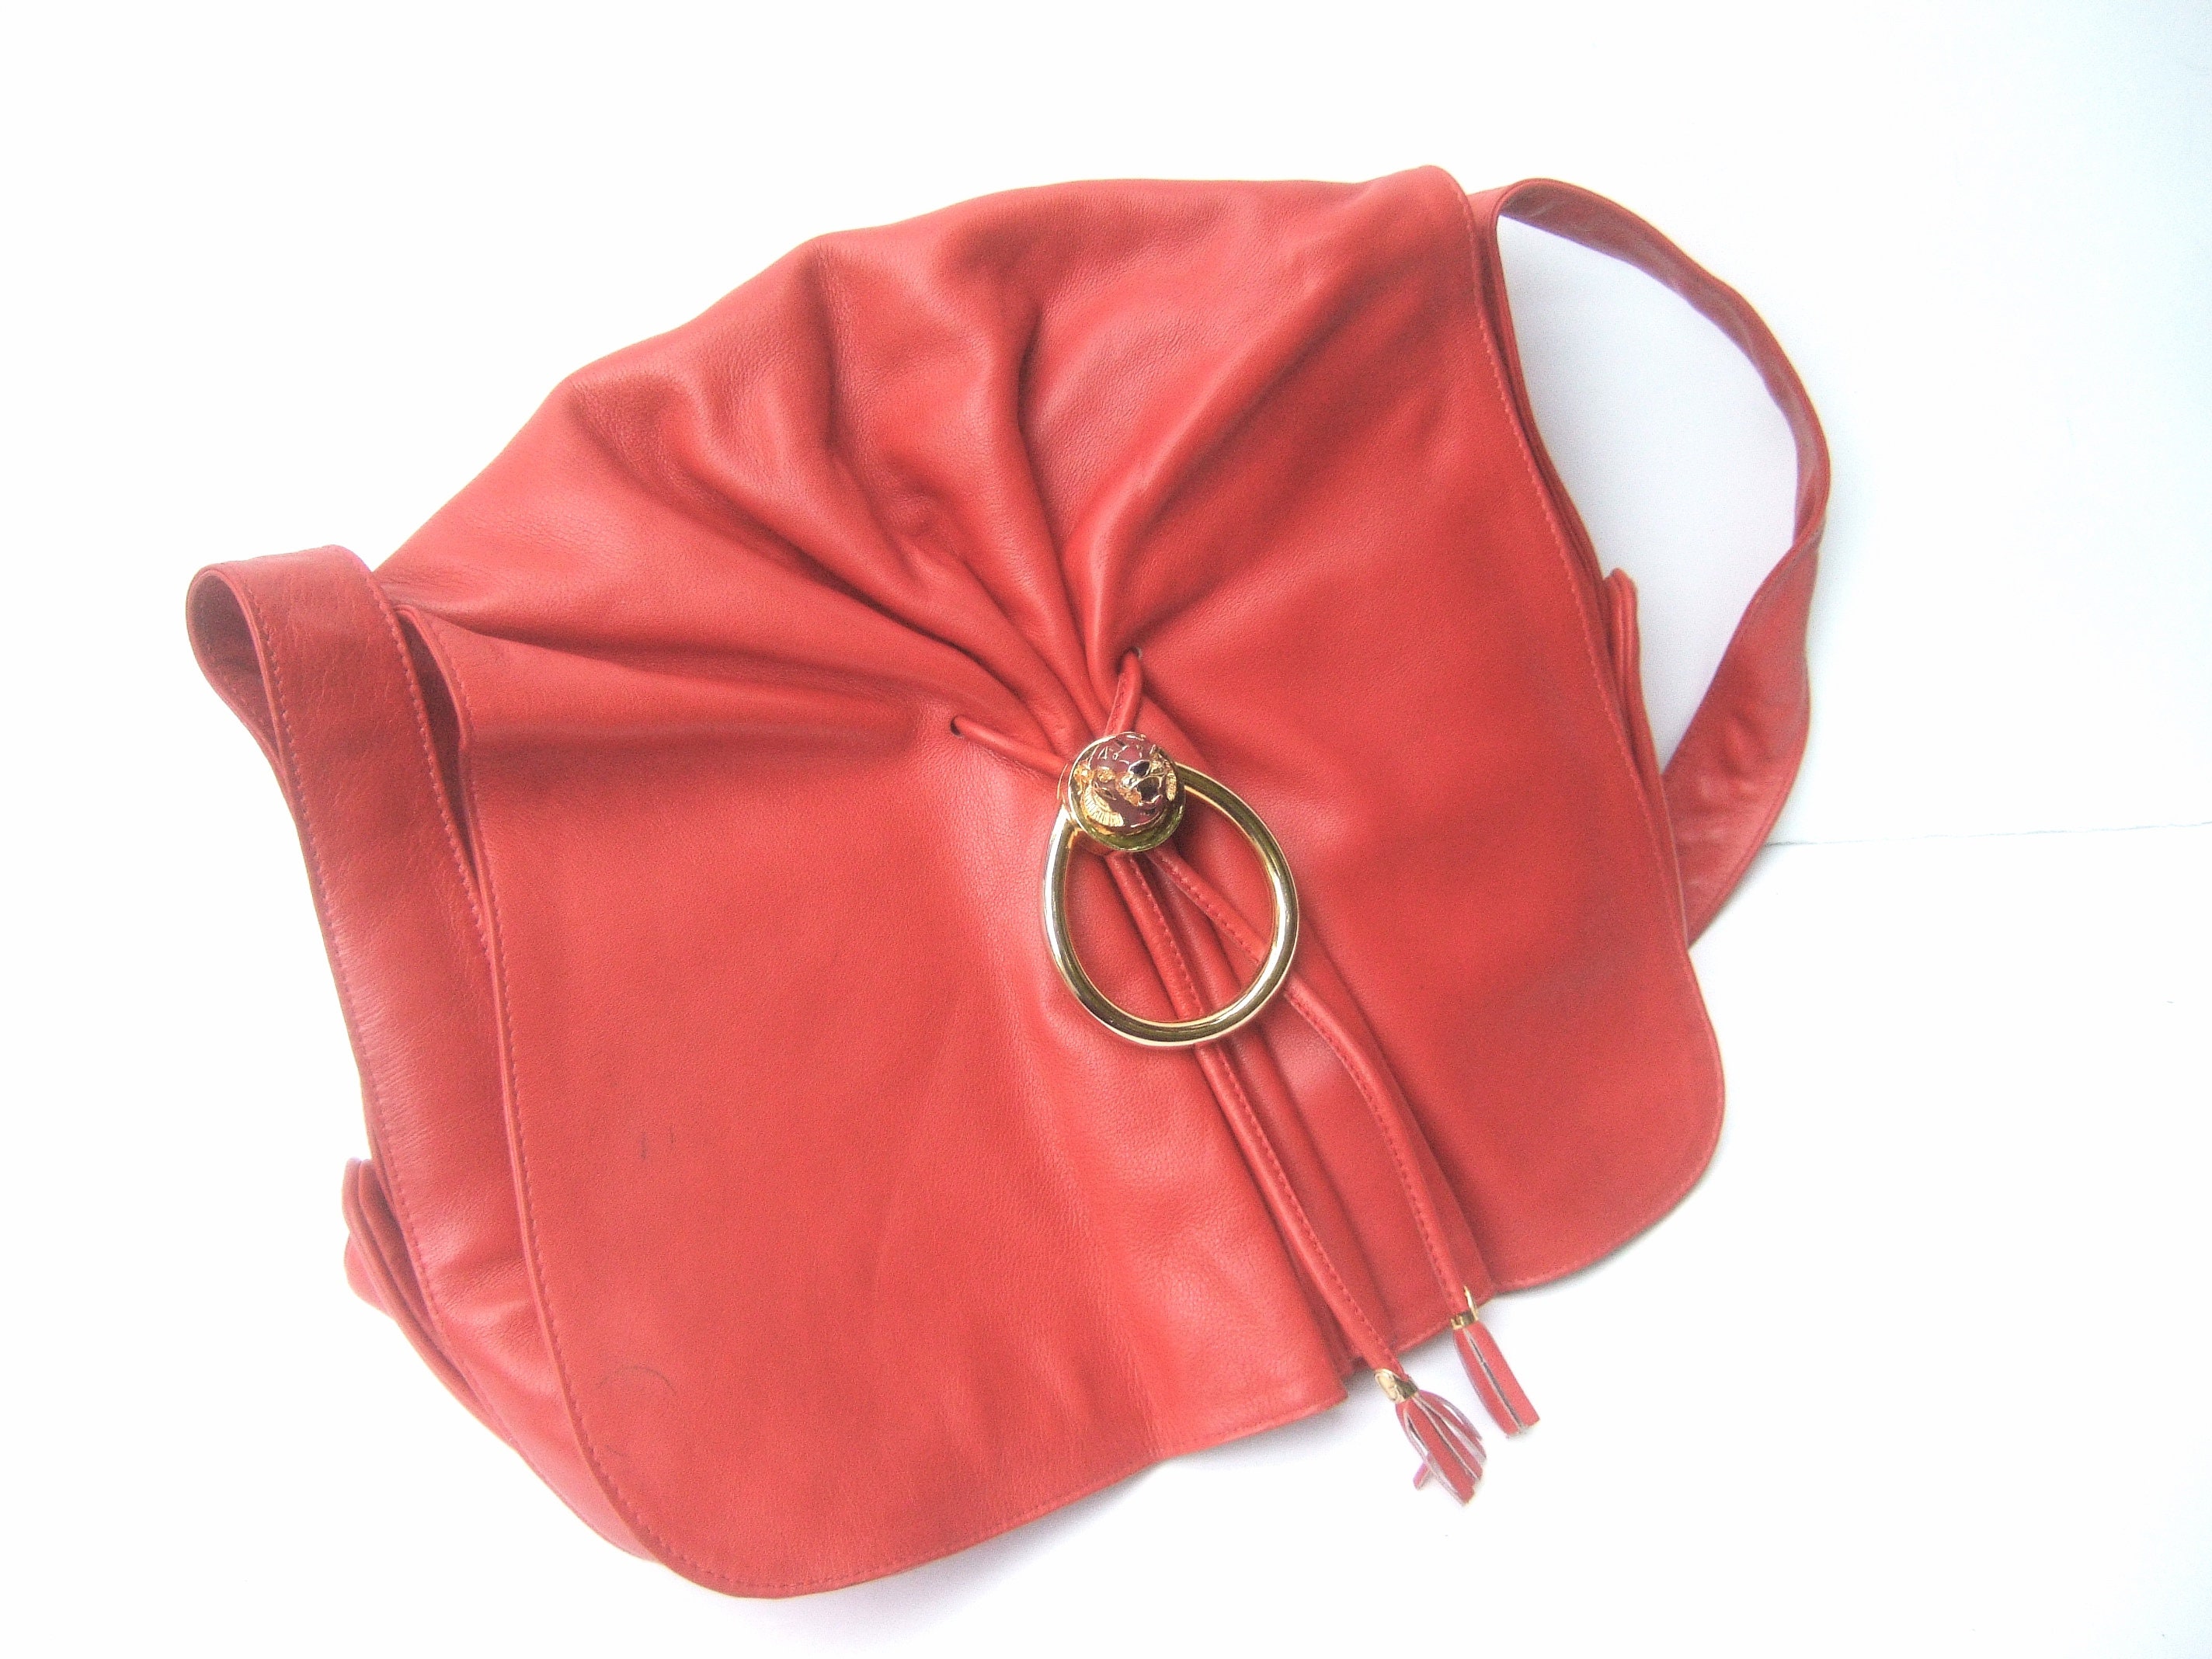 Gucci Tom Ford PINK SUEDE Tiger Charm Shoulder Clutch Bag RARE!!